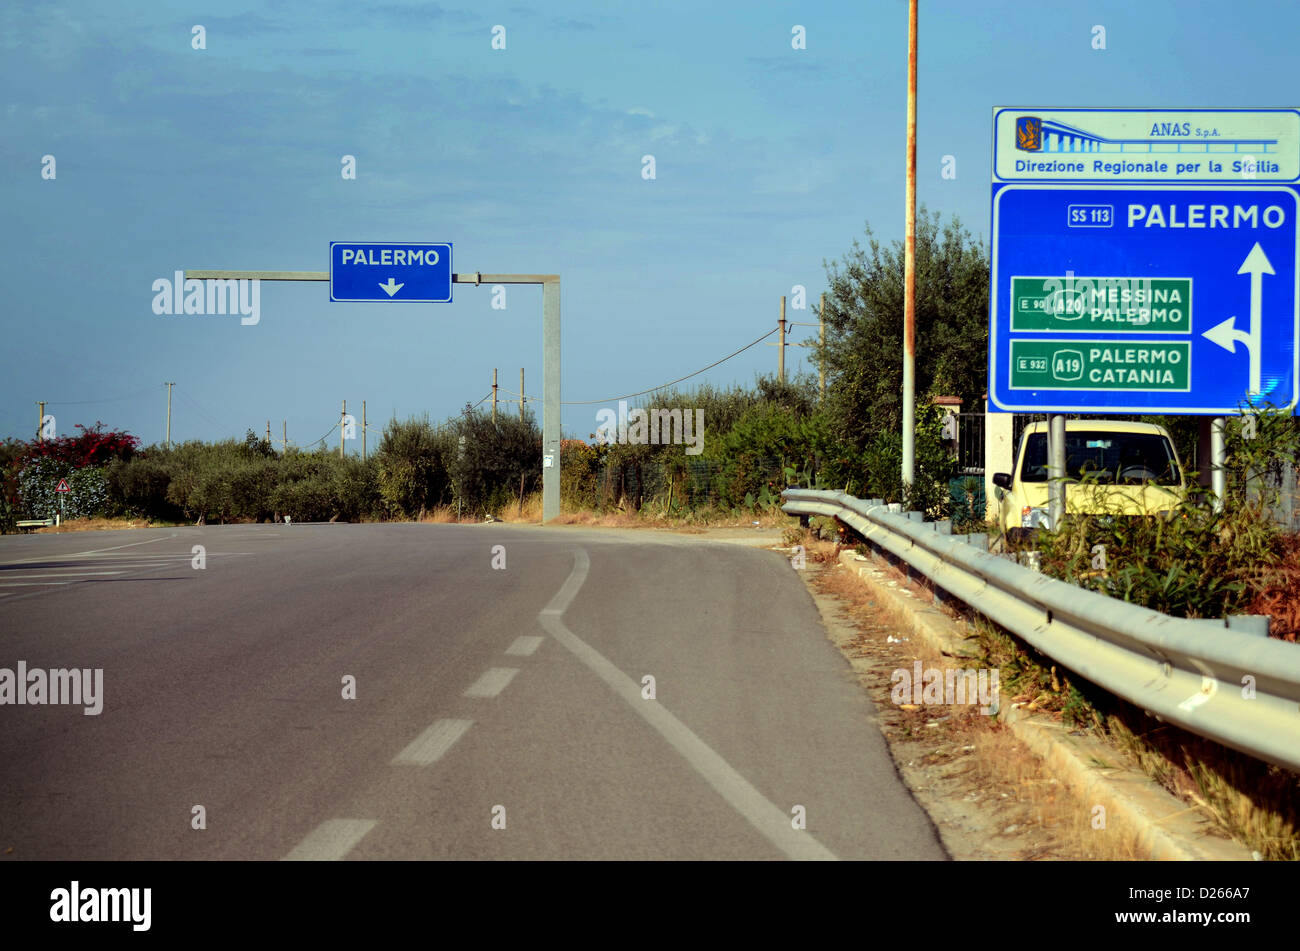 Palermo Sicily road sign Stock Photo